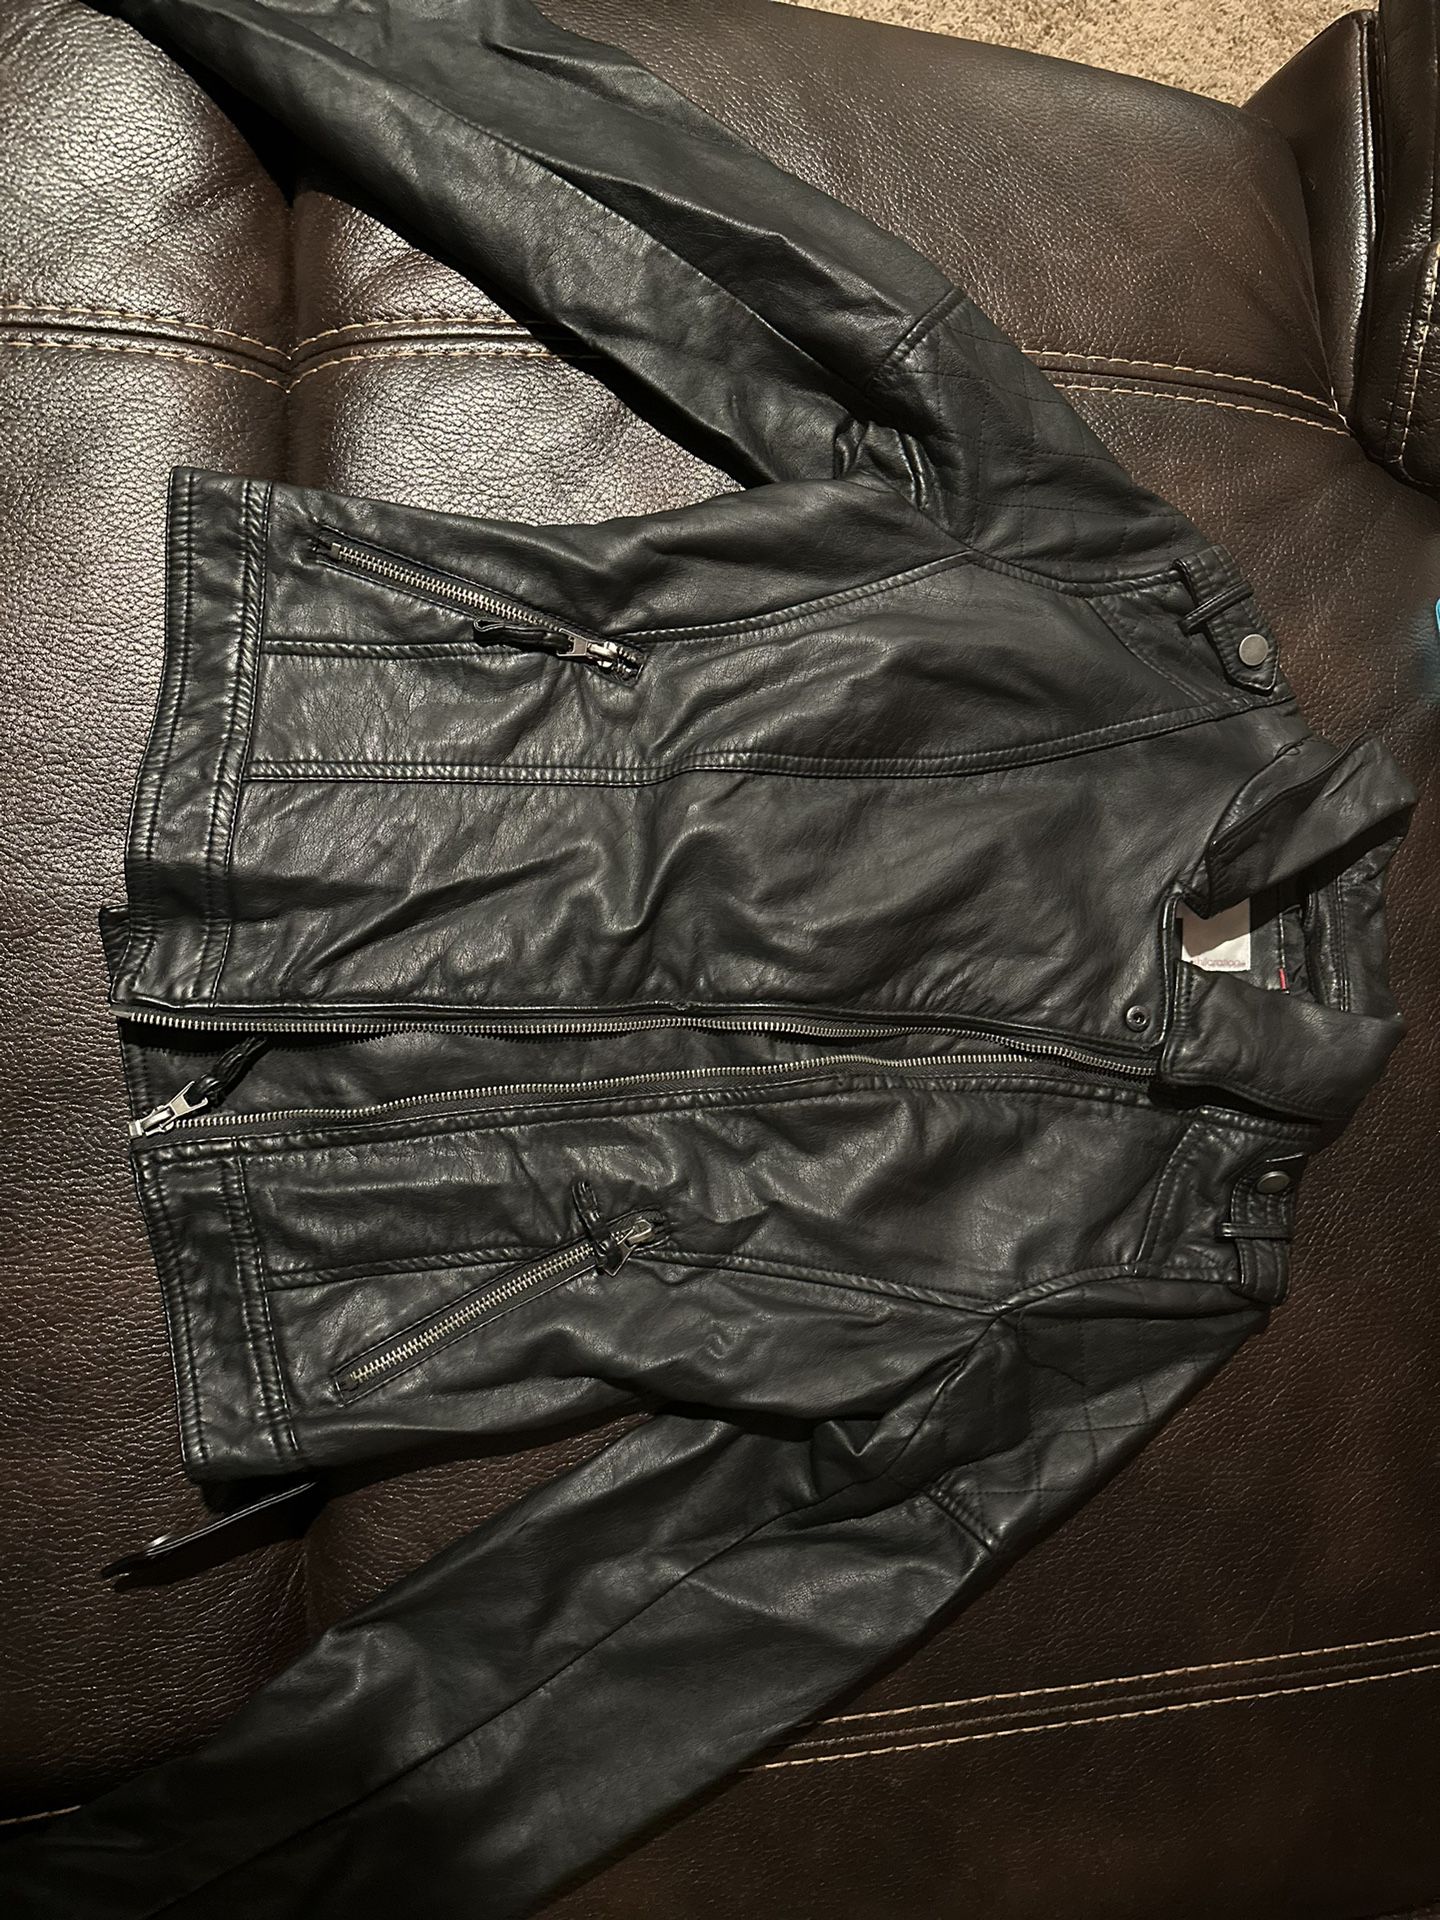 Black Leather Jacket Size Small